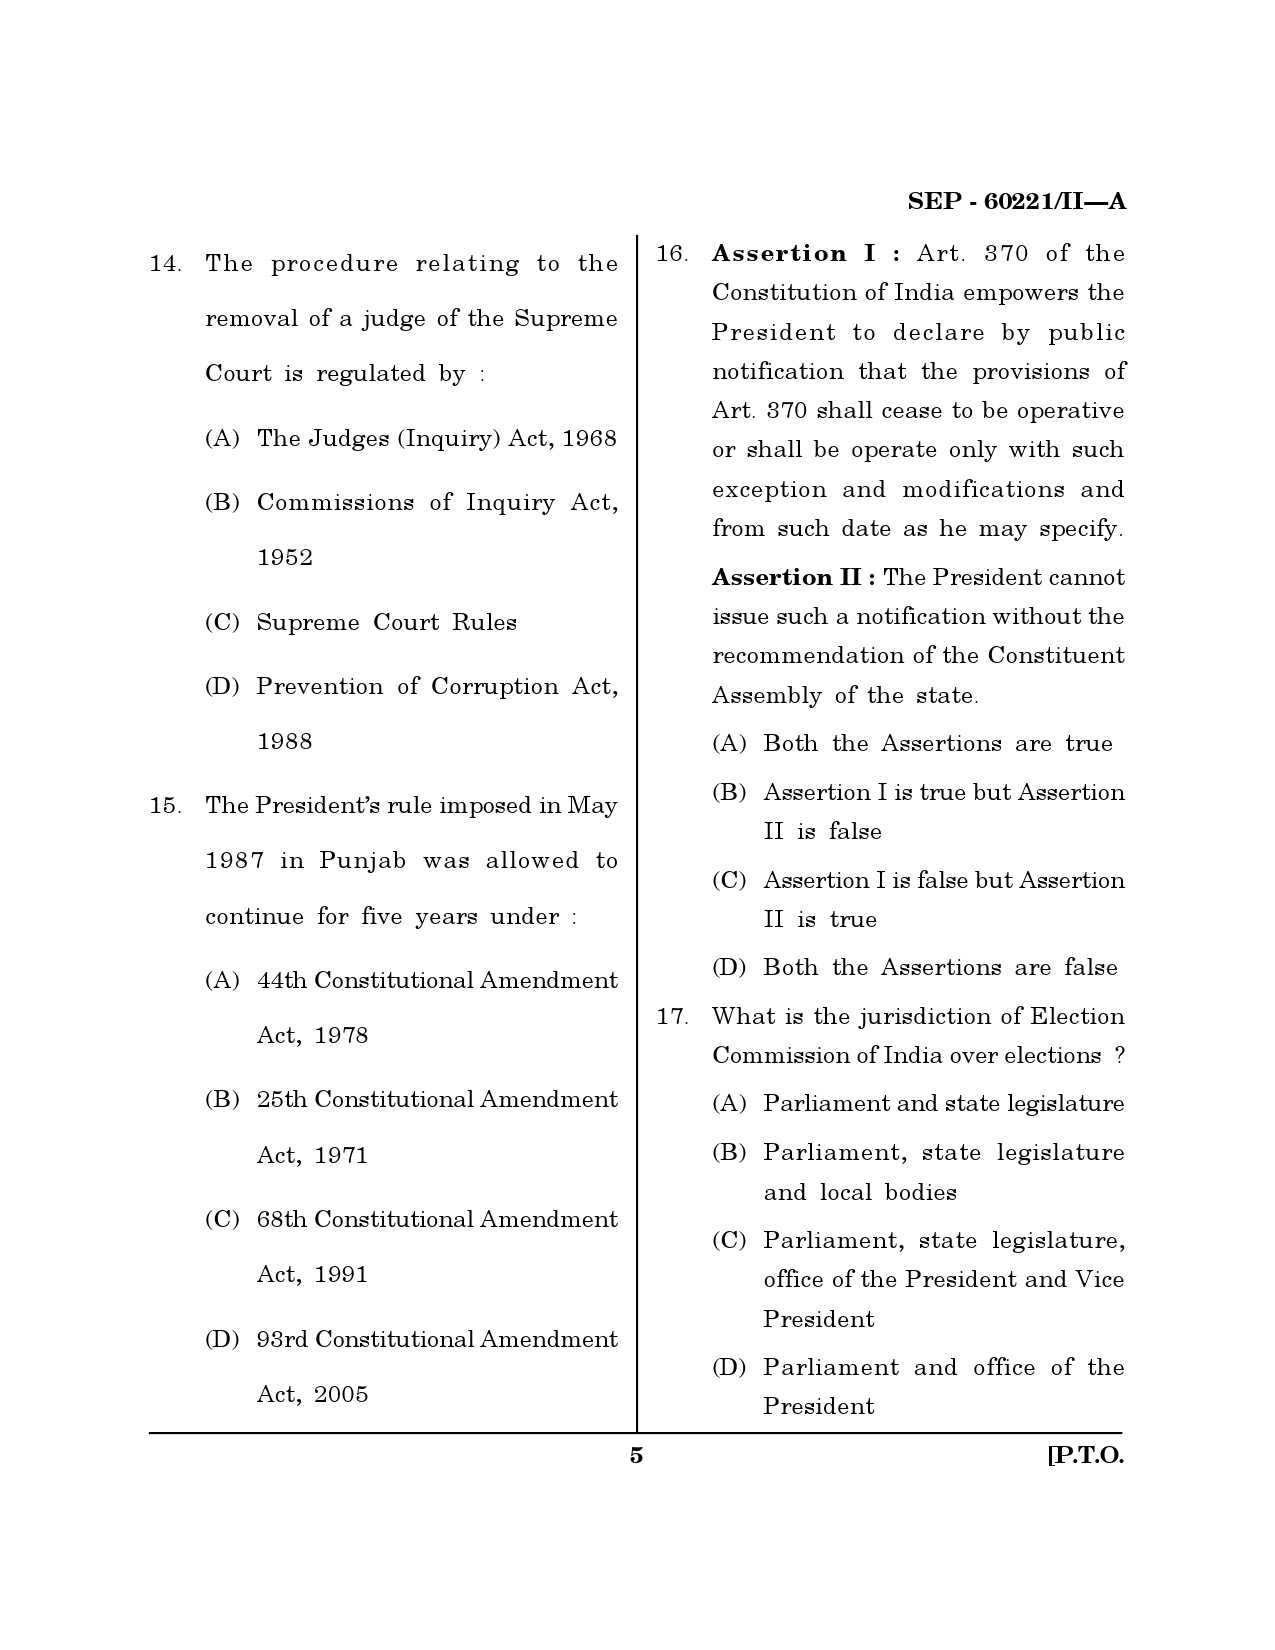 Maharashtra SET Law Exam Question Paper September 2021 4